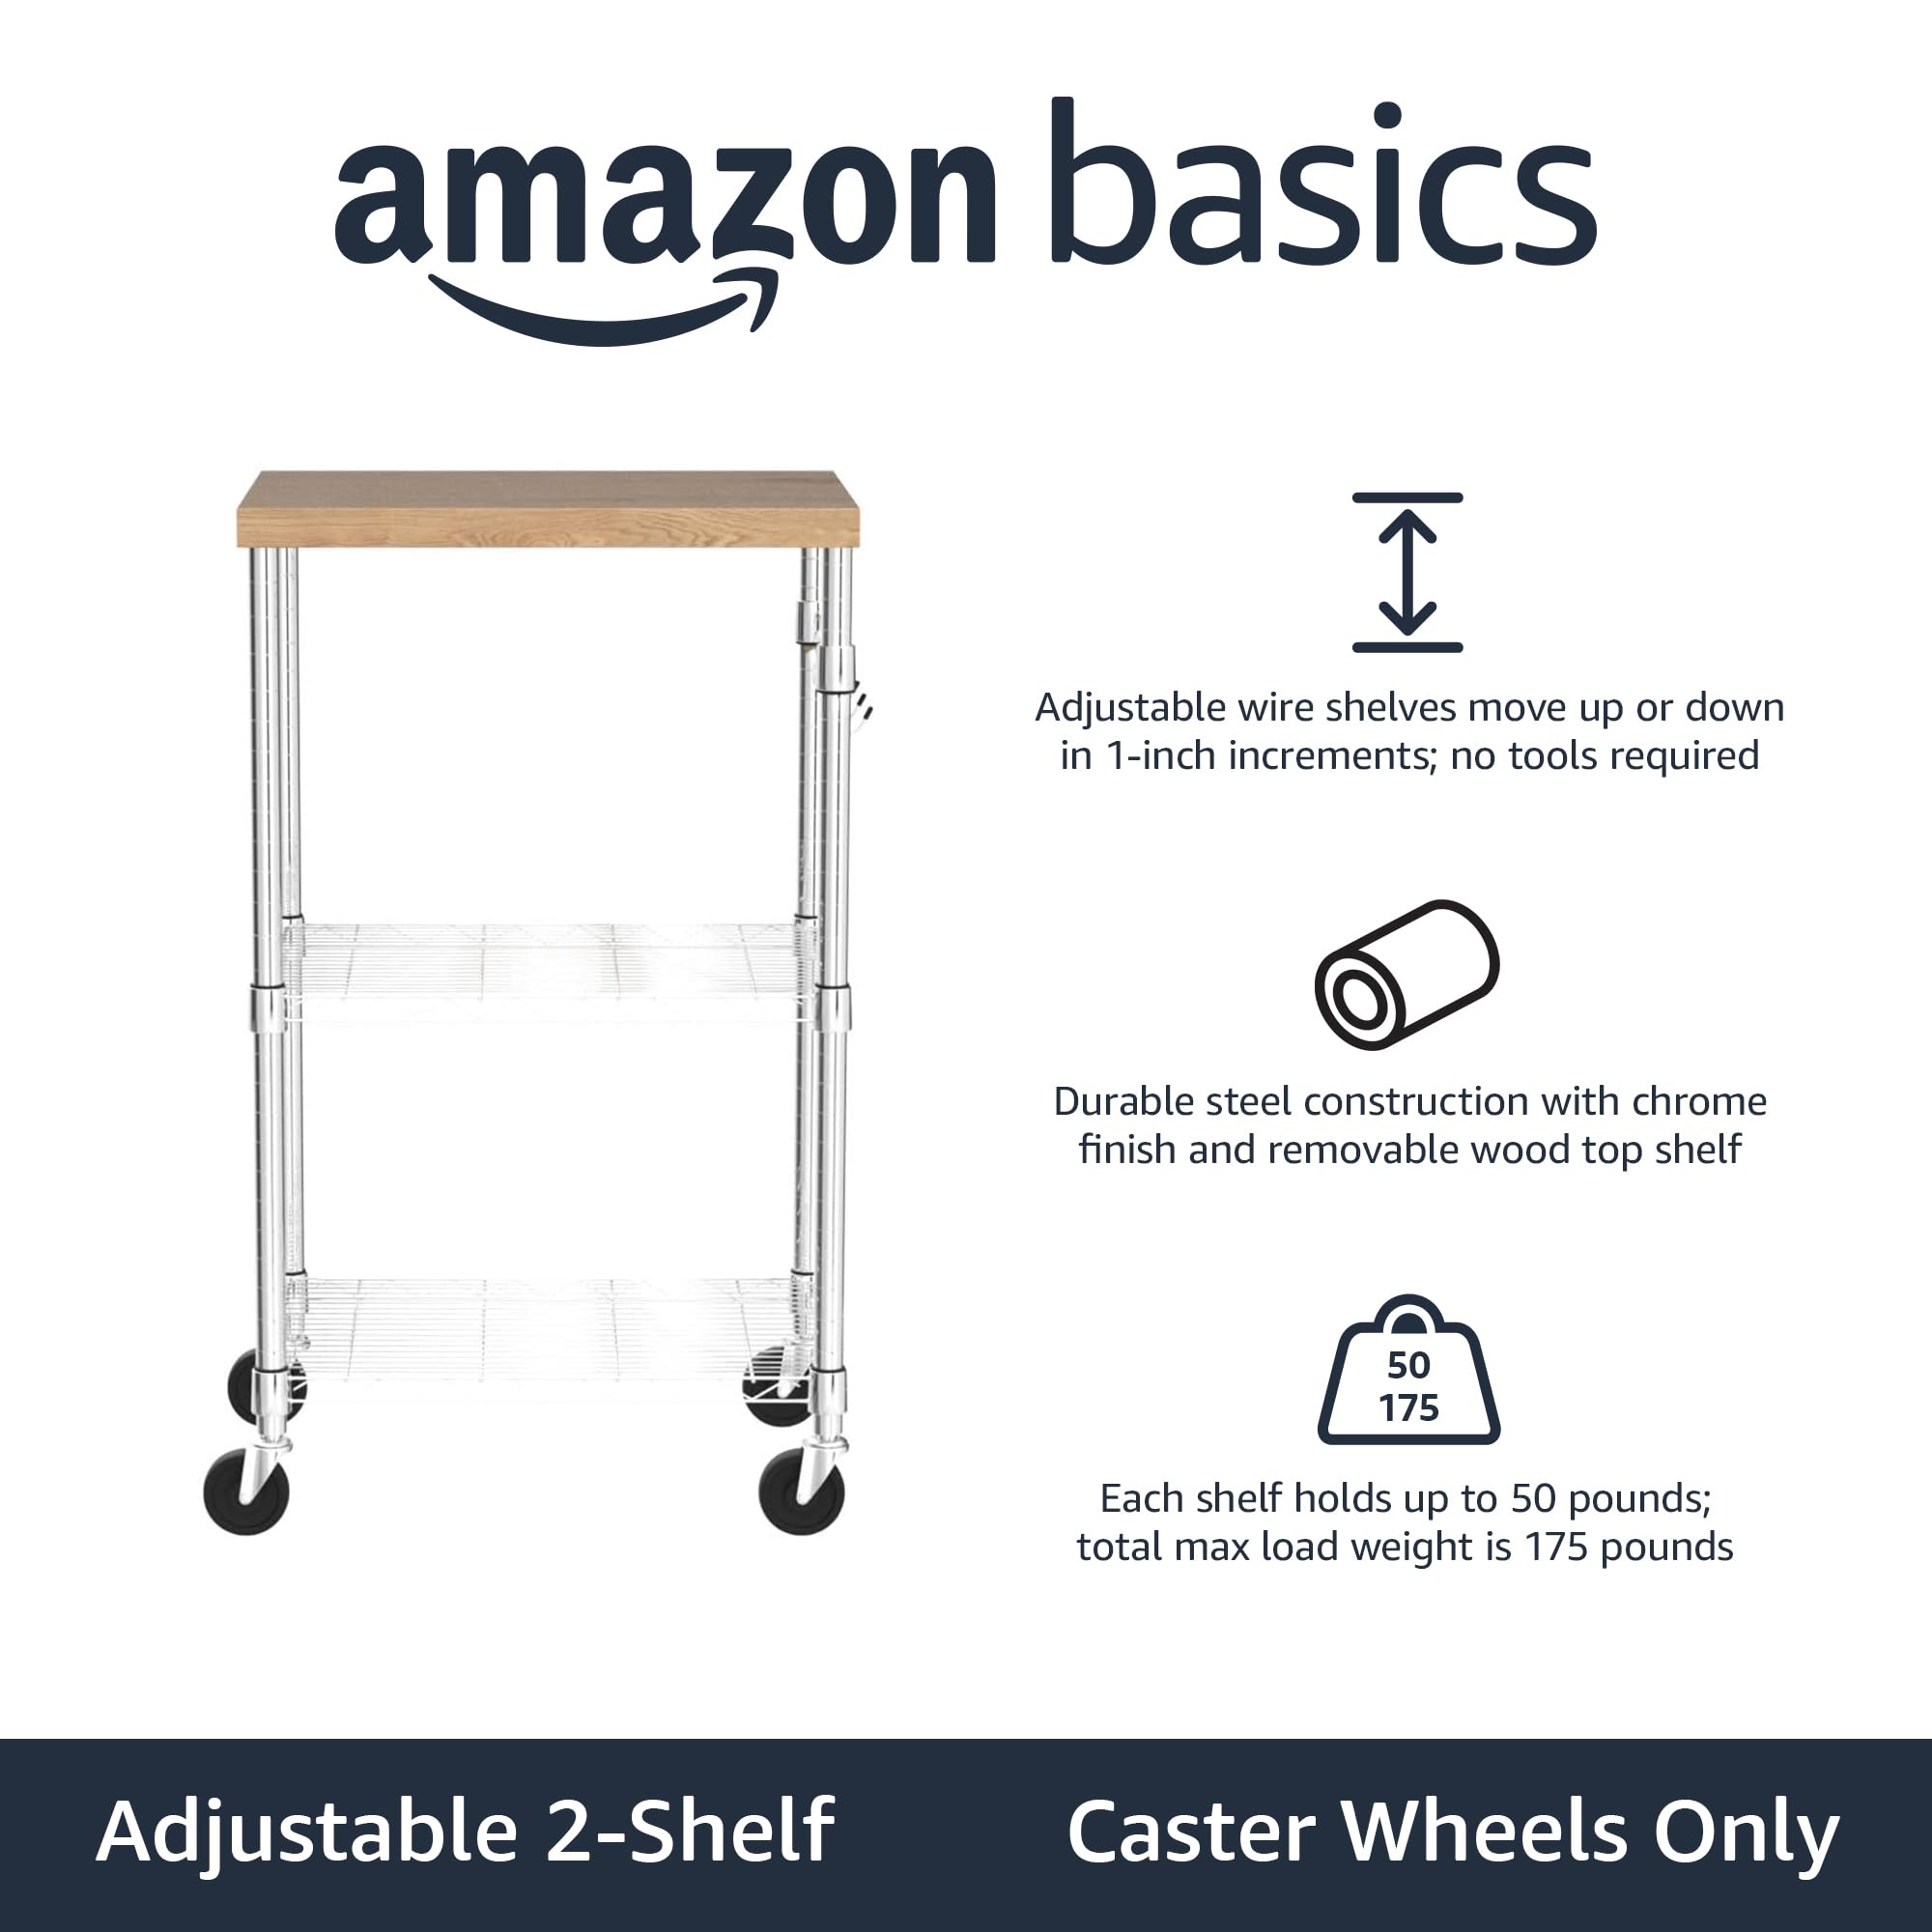 Amazon Basics Kitchen Storage Microwave Rack Cart on Caster Wheels with Adjustable Shelves, 175 Pound Capacity, 15 x 21 x 36.7 inches, Wood/Chrome